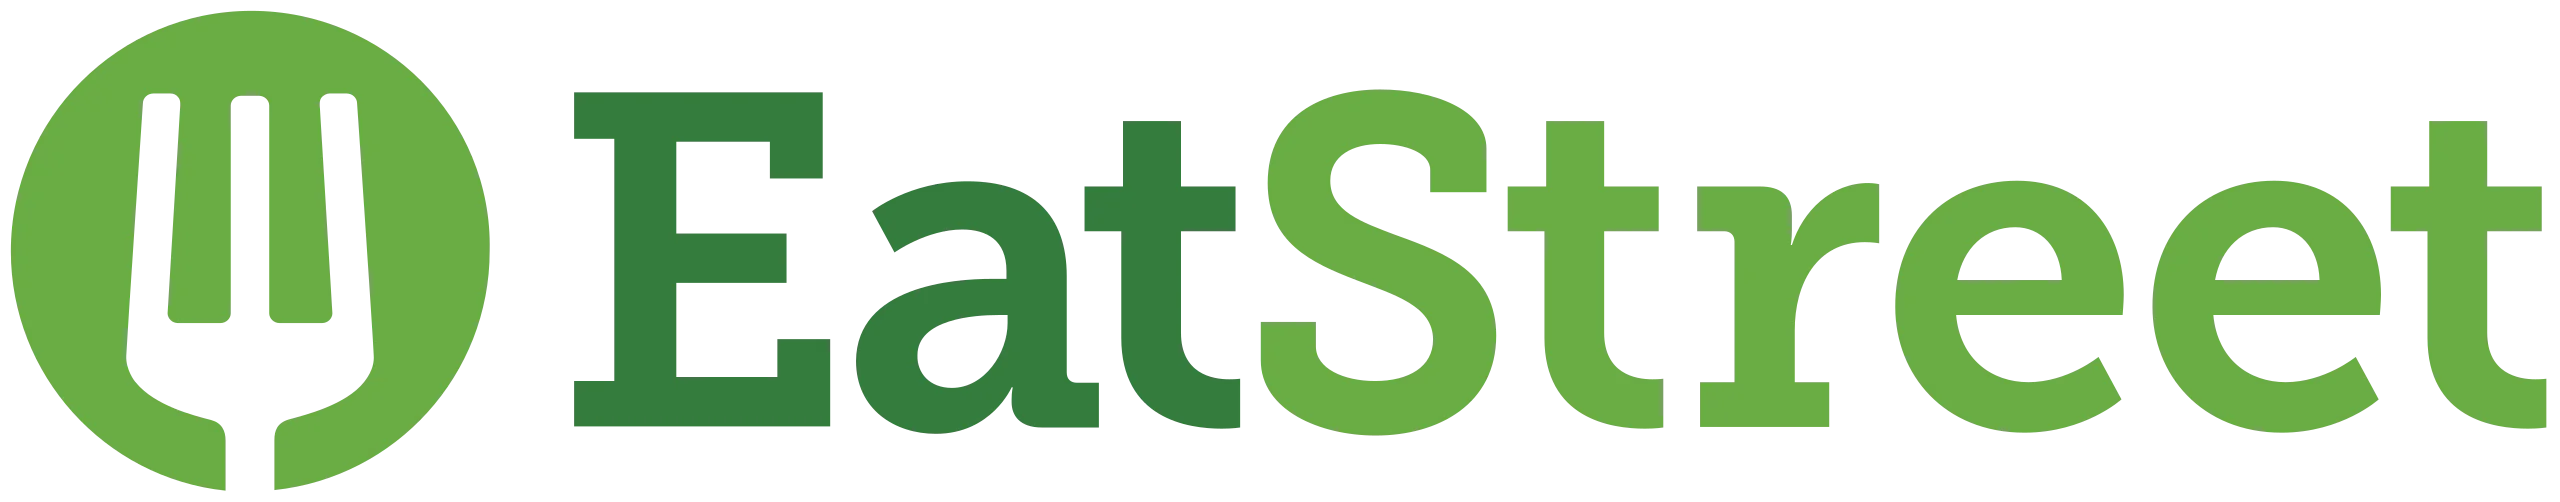 Eatstreet logo.svg